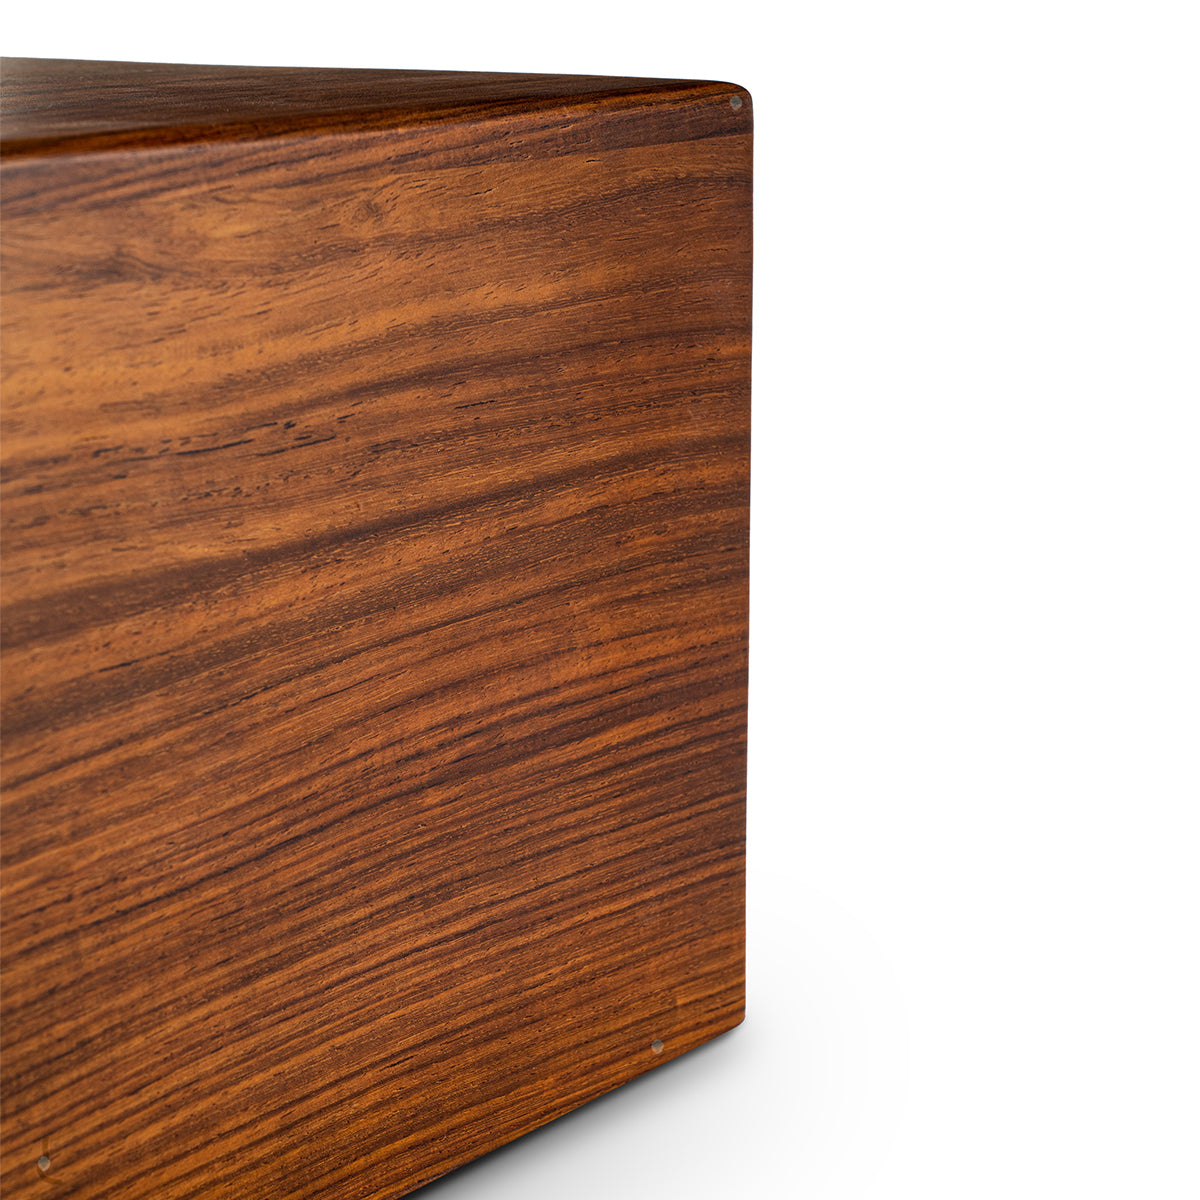 Adult Aura Football Custom Engraved Solid Wood Box Cremation Urn